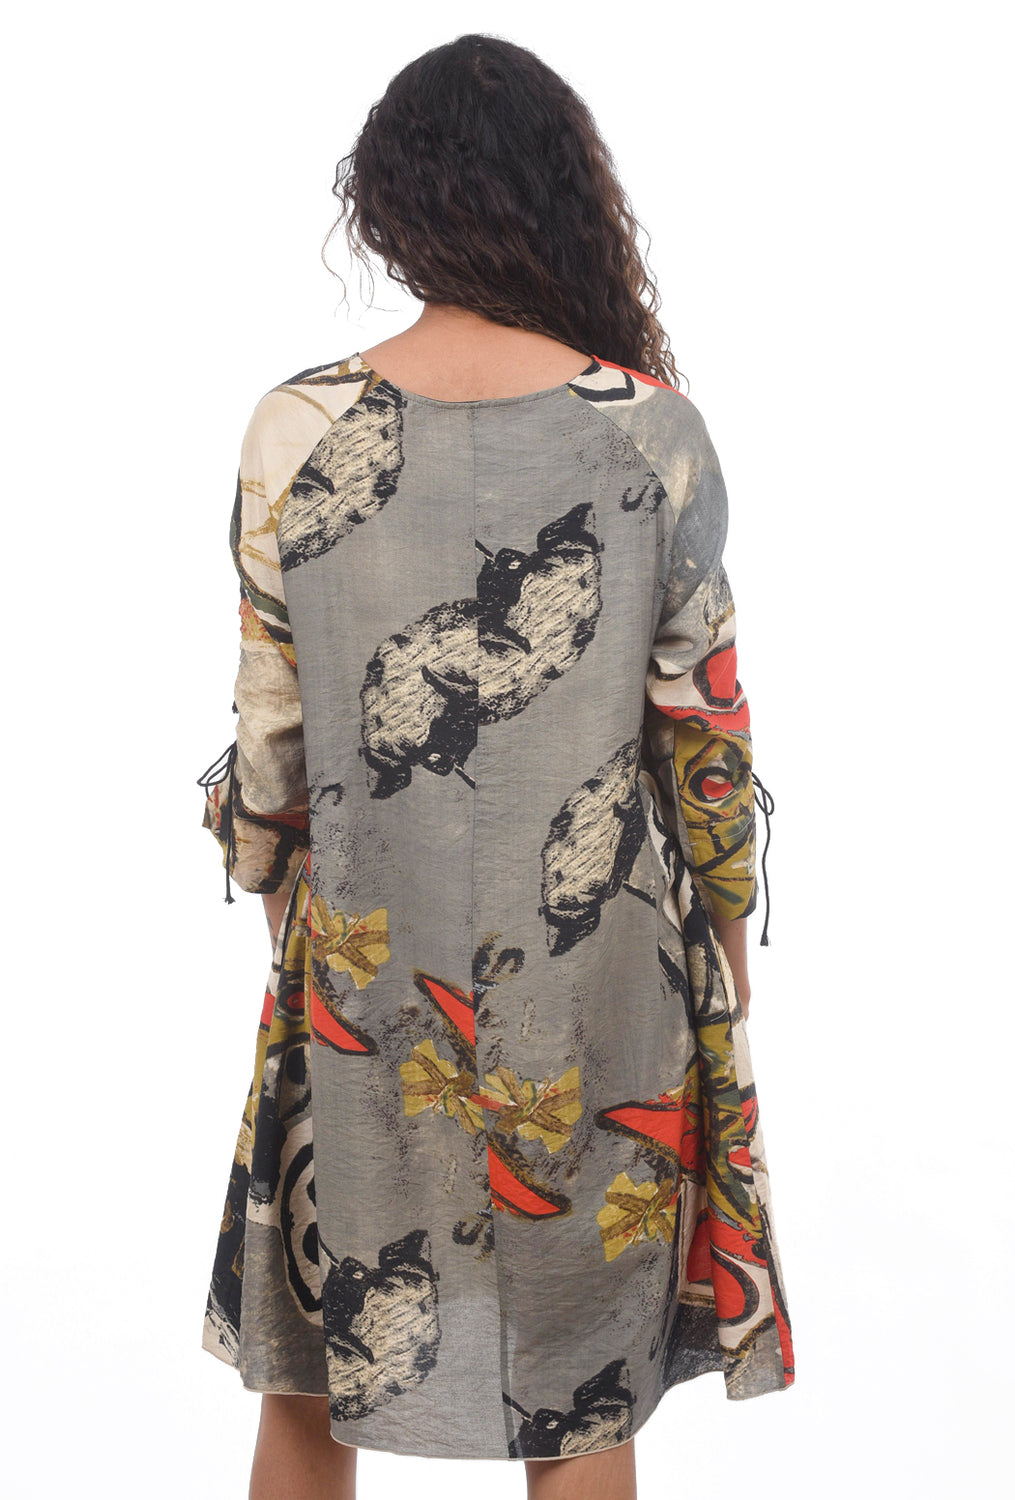 3P Woven Abstract Print Dress, Khaki